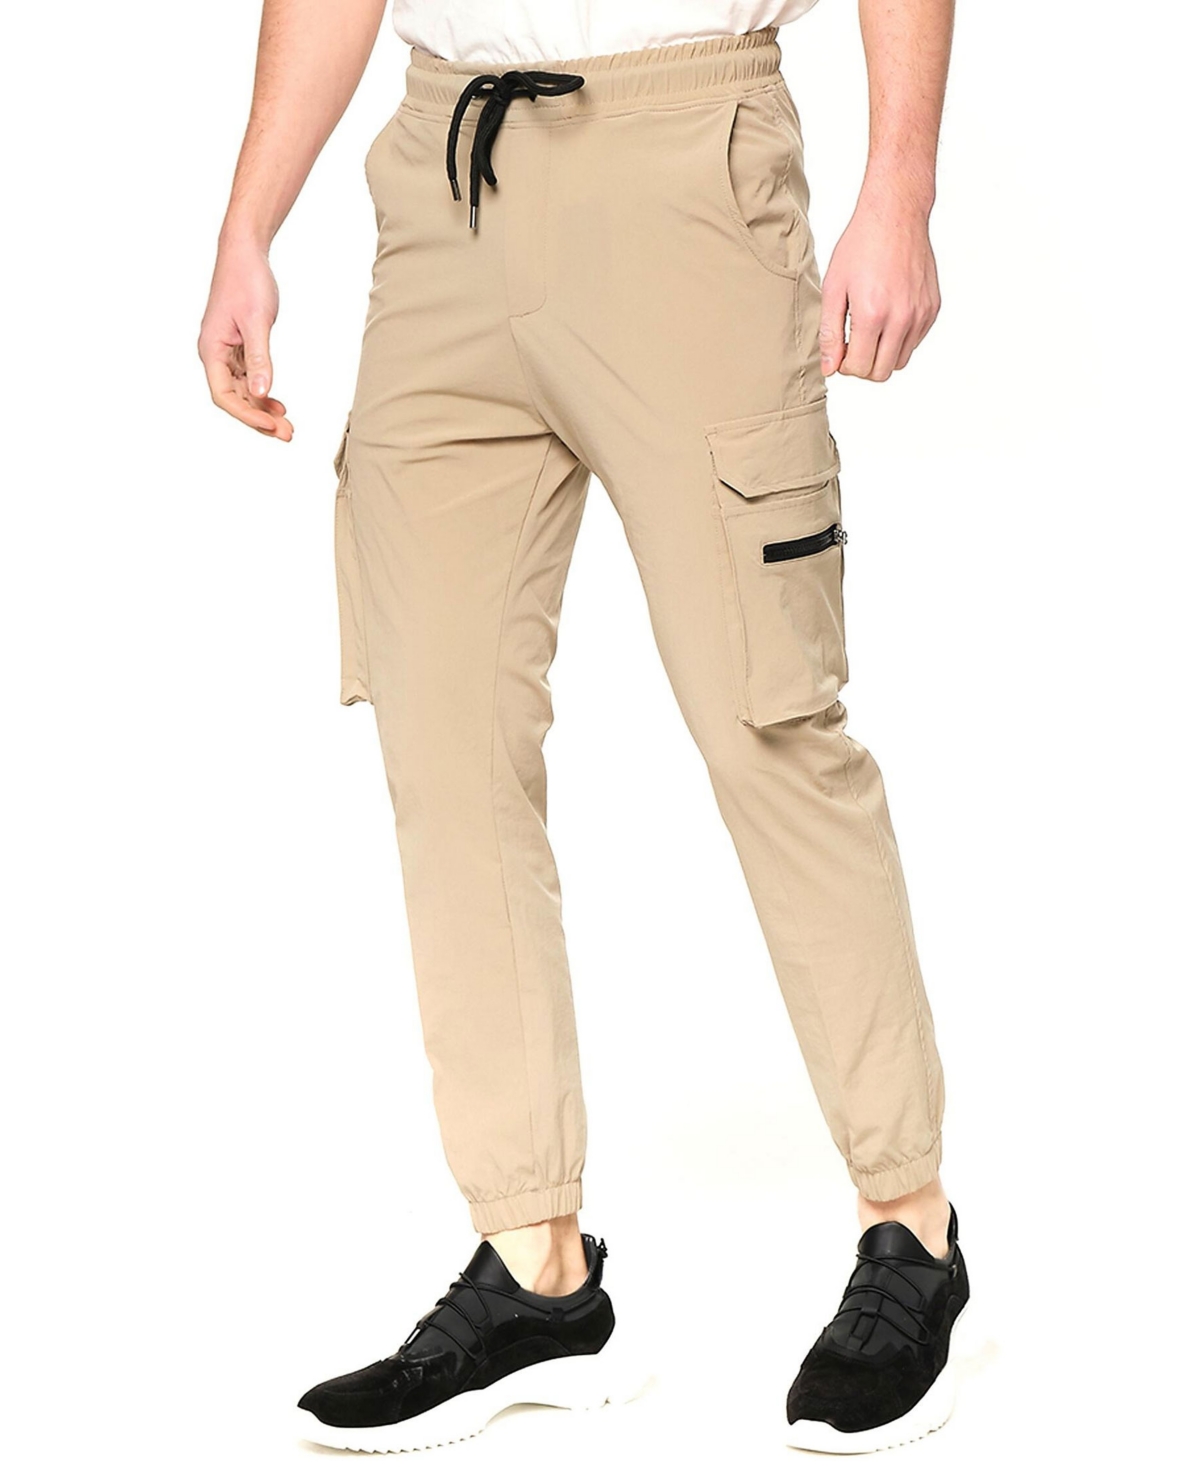 Men's Slim-Fit Modern Track Pants - Teal Green